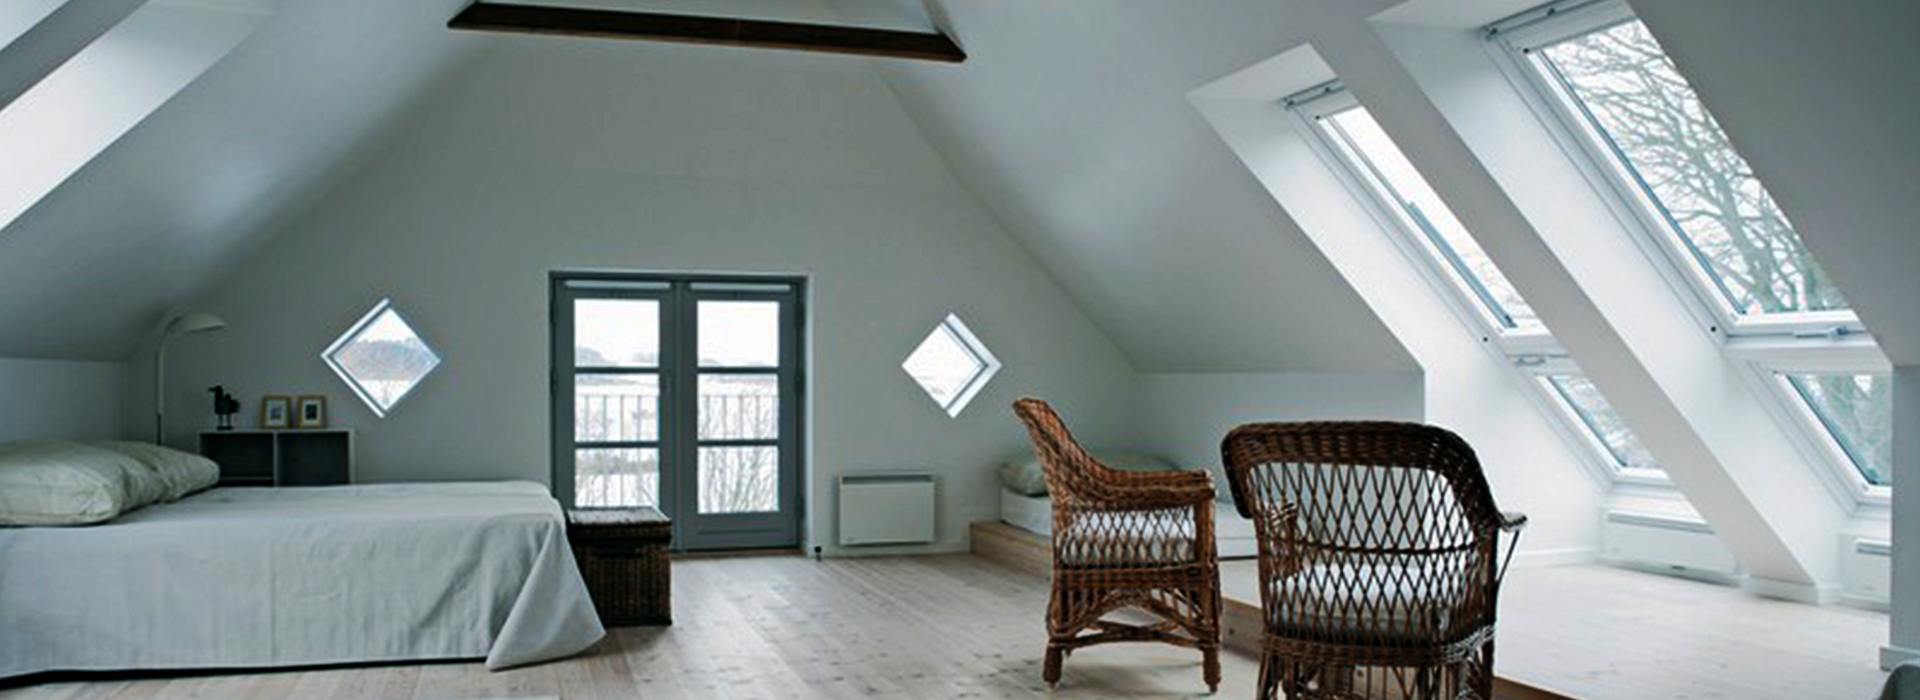 Loft Conversion – Choosing the Perfect Wood Flooring